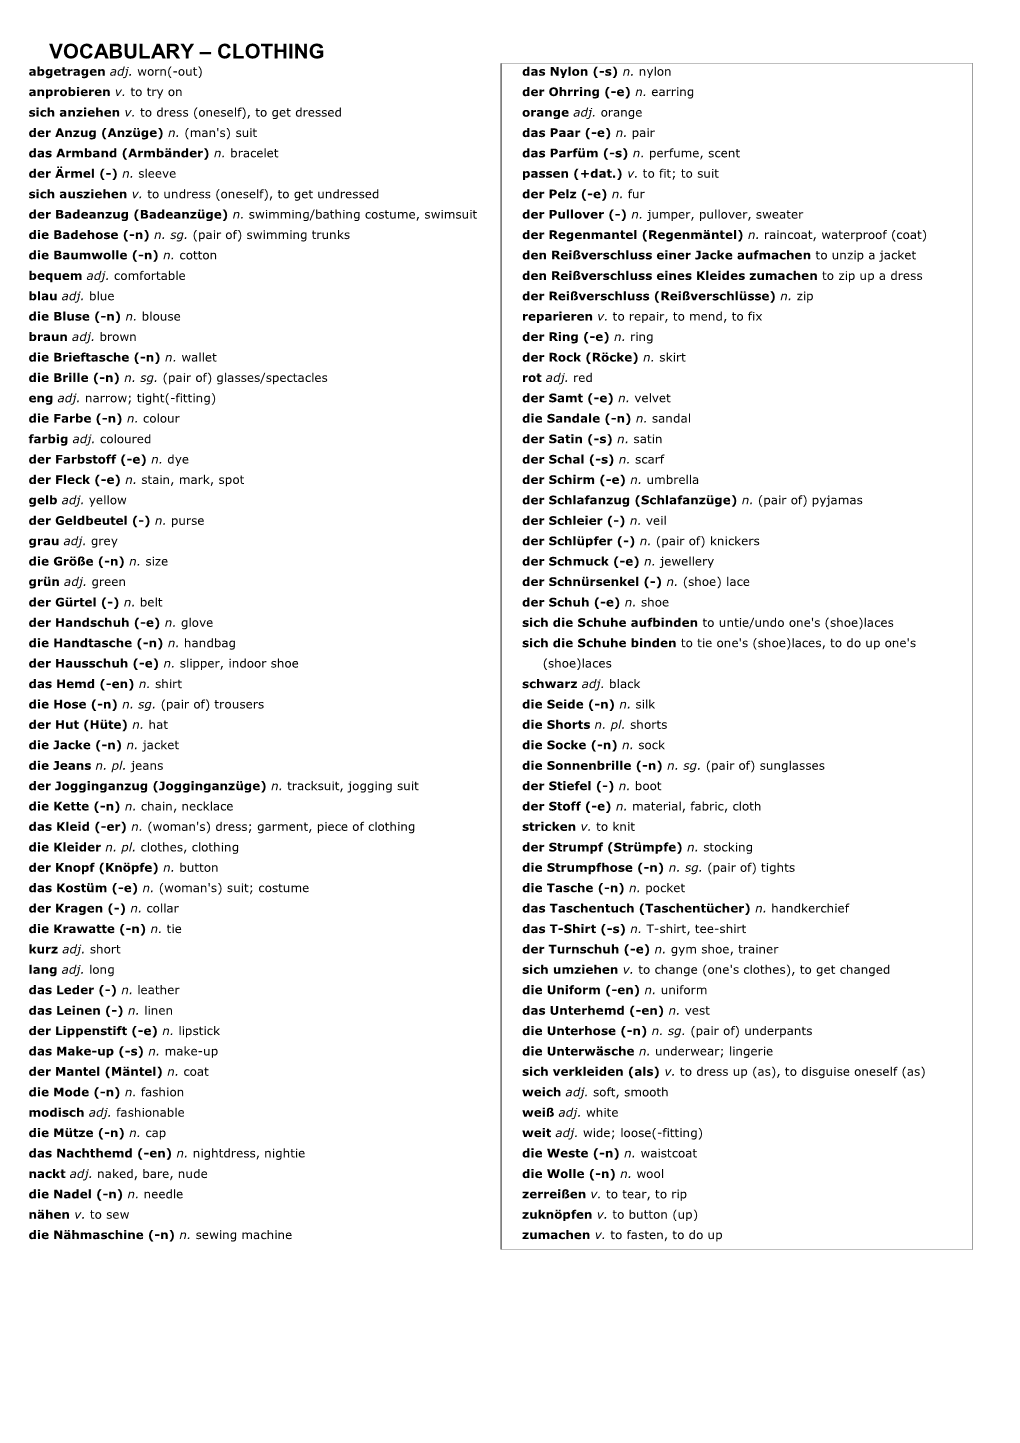 First Vocabulary List